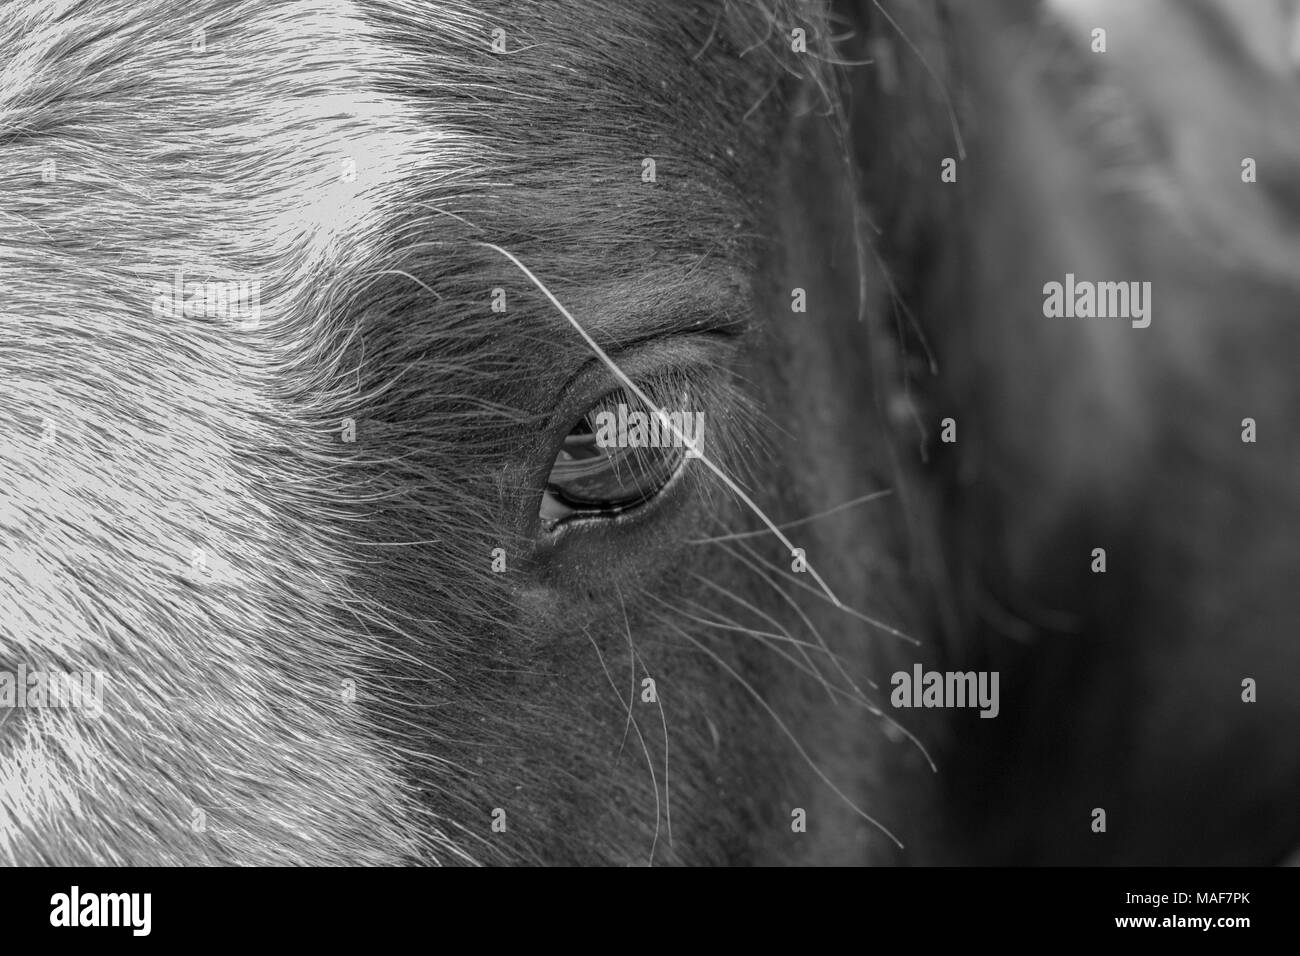 Horse eye black and white Stock Photo